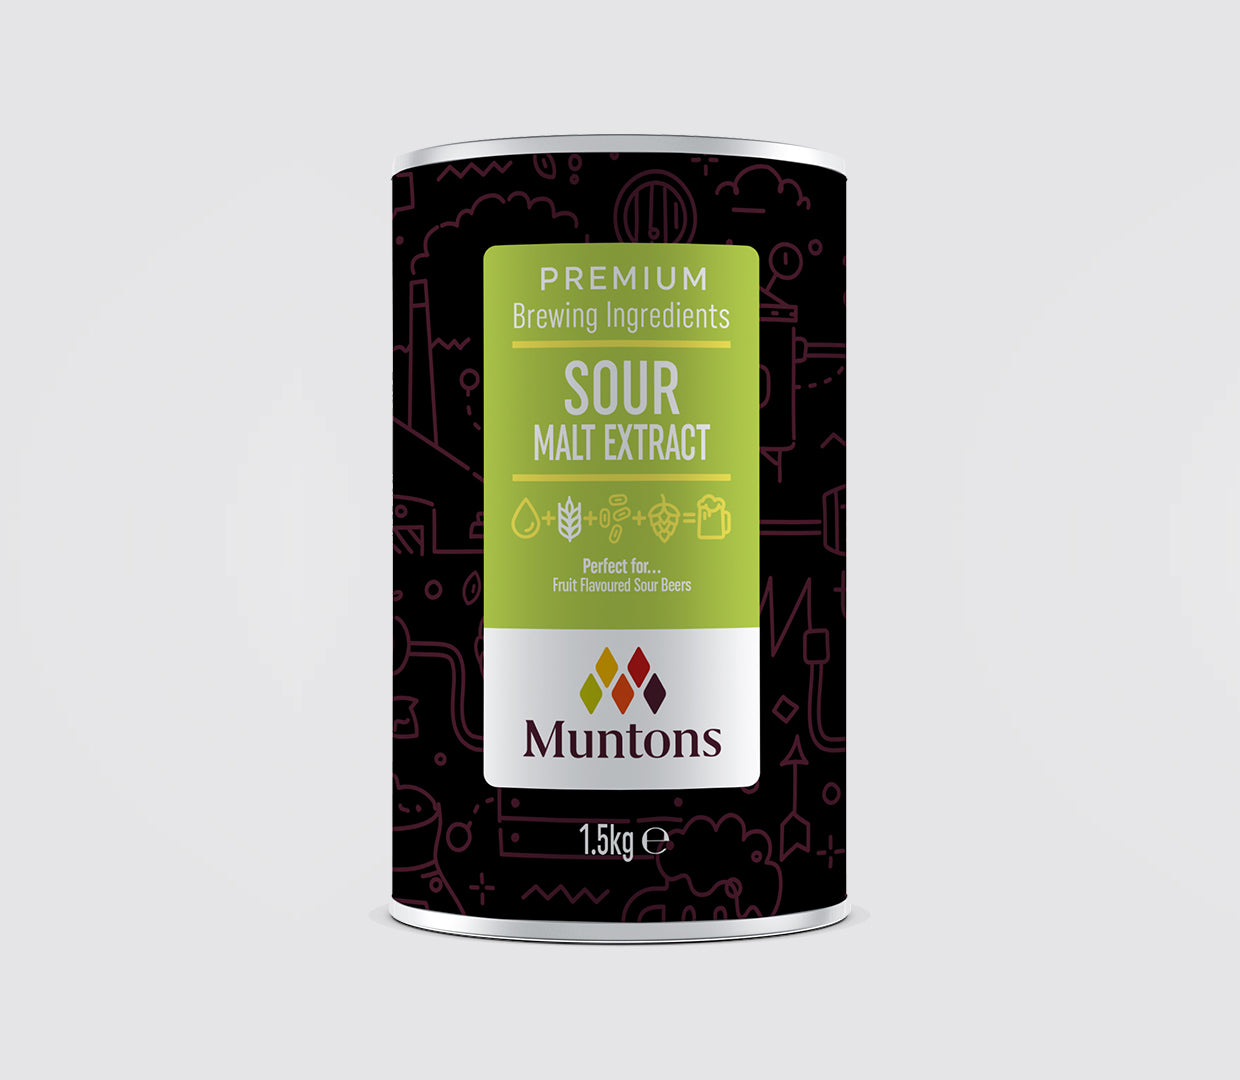 Muntons Sour Malt Extract 1.5kg - All Things Fermented | Home Brew Shop NZ | Supplies | Equipment